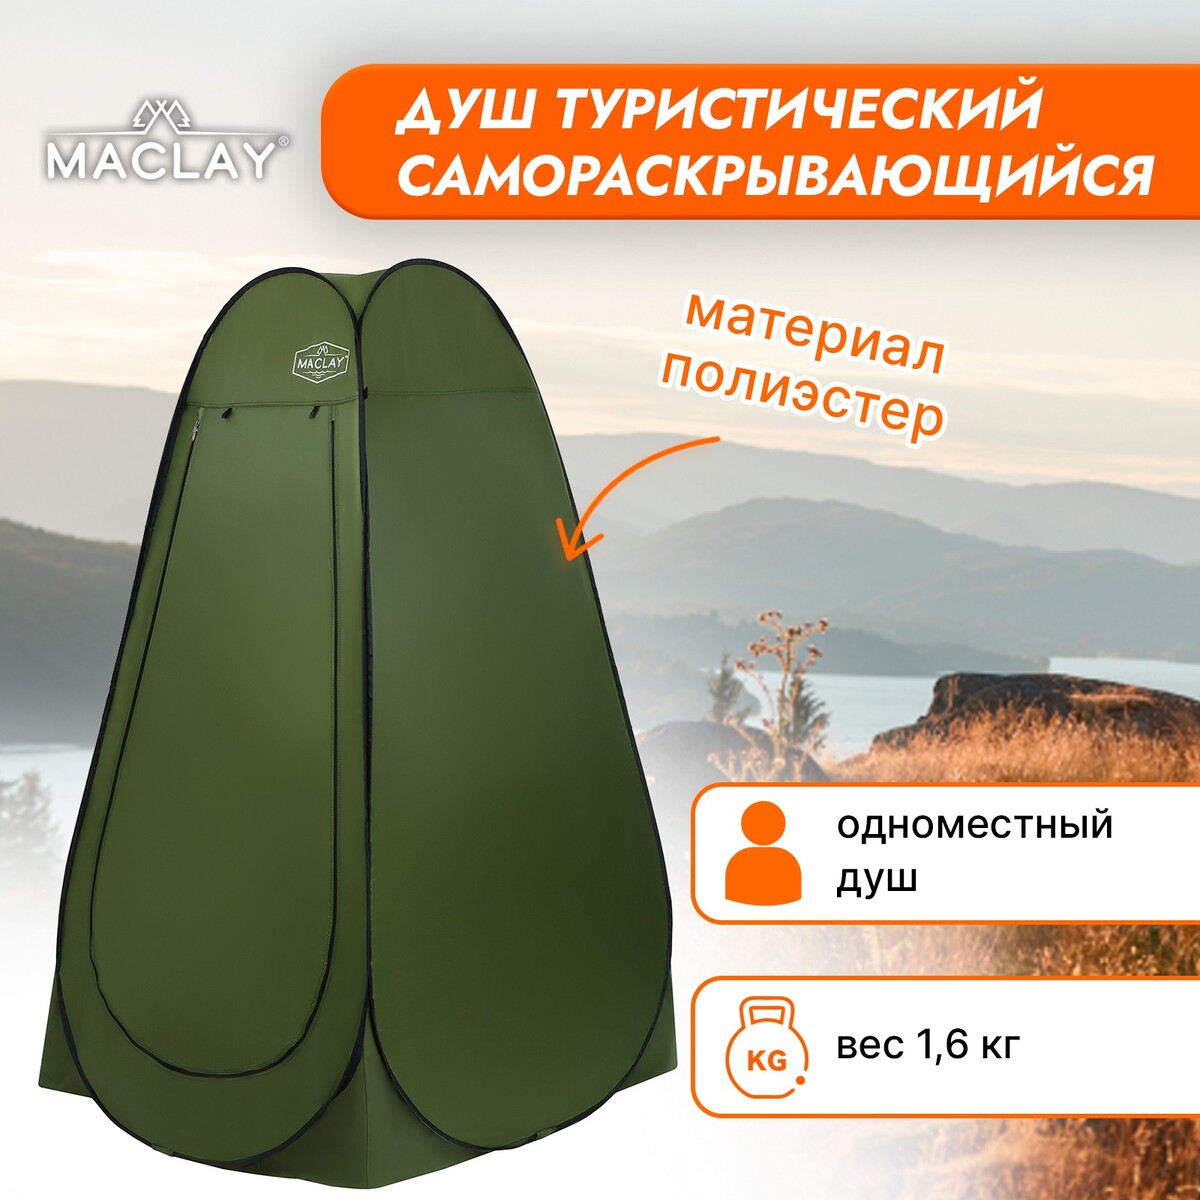 Палатка туристическая maclay, самораскрывающаяся, для душа, 120х120х195 см, цвет зеленый палатка трекинговая maclay terskol 2 205х150х105 см 2 местная